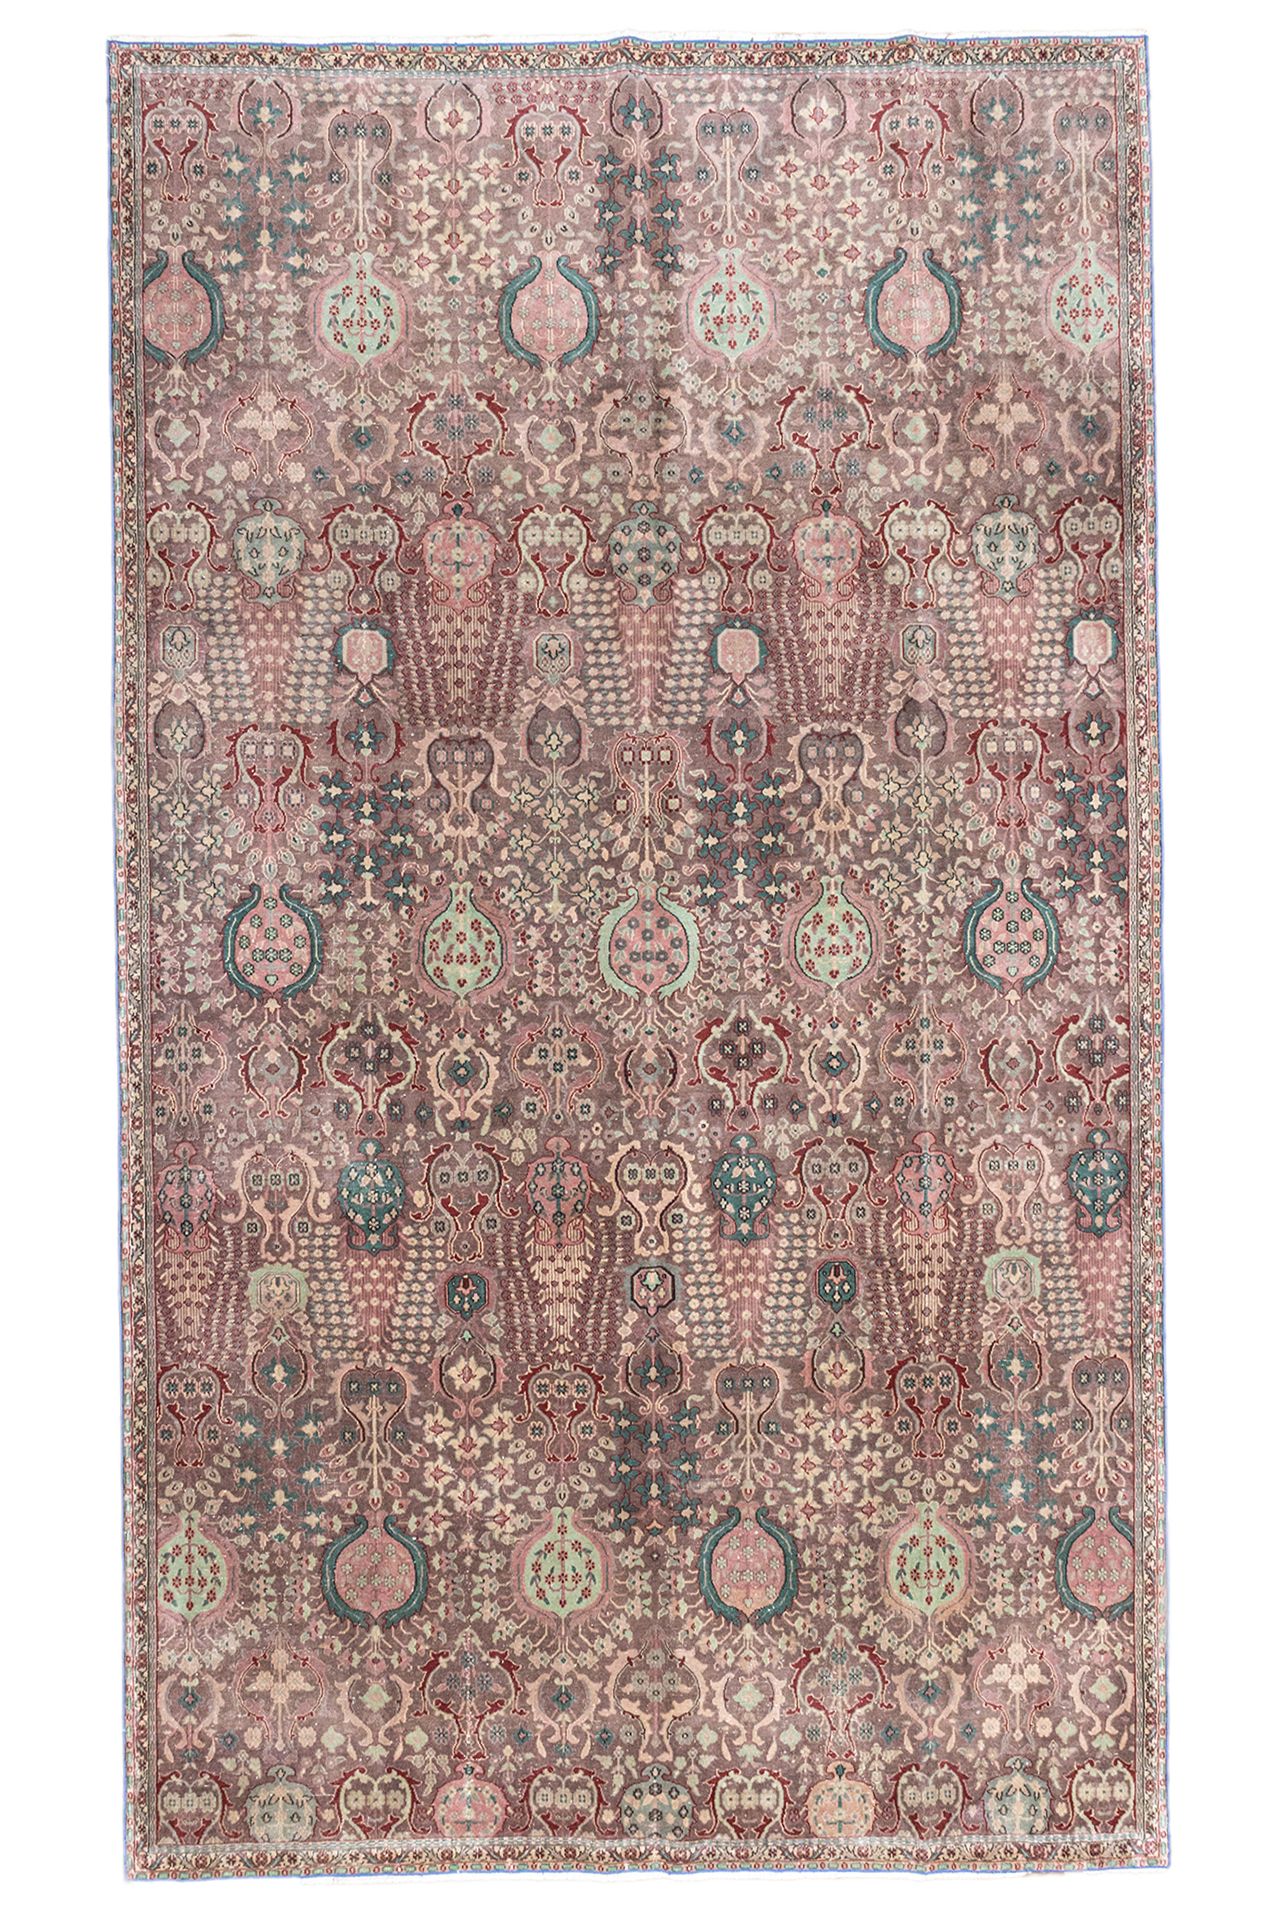 Saulet Ethnic Figured Hand-Woven Persian Carpet 186x286 cm